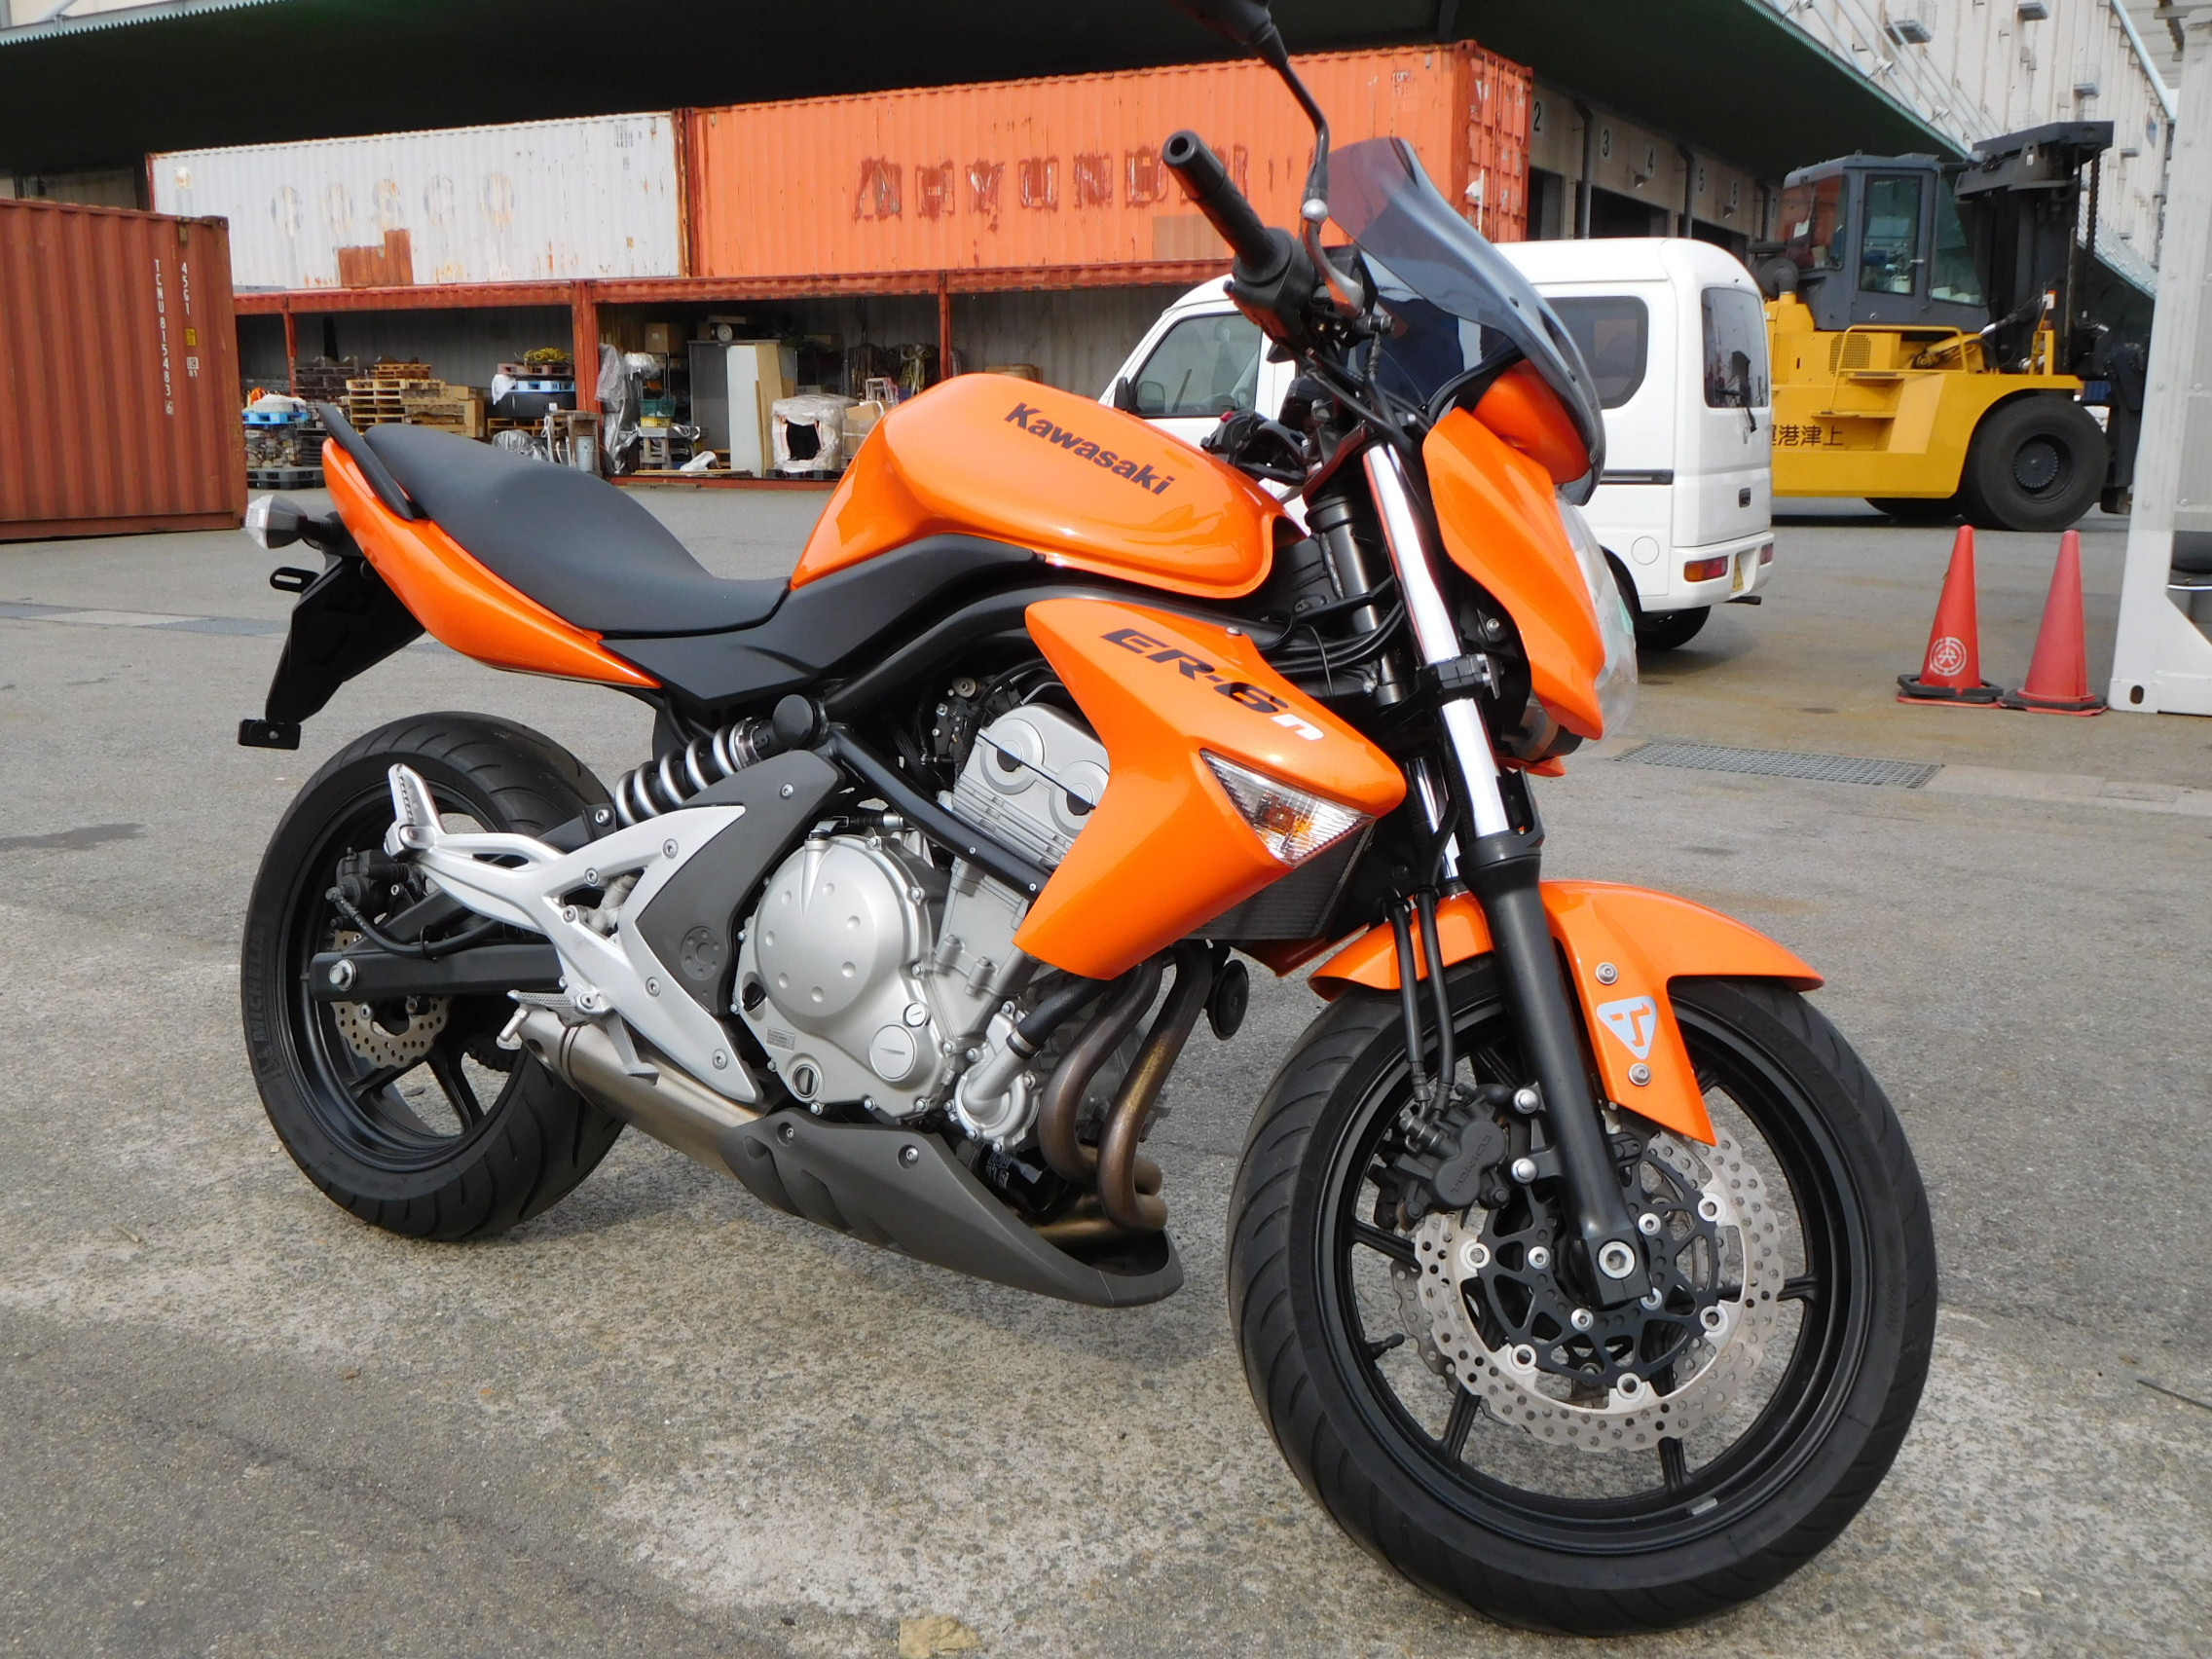 Honda челябинск. Kawasaki er6n 2007. Кавасаки er6n 2007. Kawasaki er6n оранжевый. Kawasaki er6n Orange 2007 года.